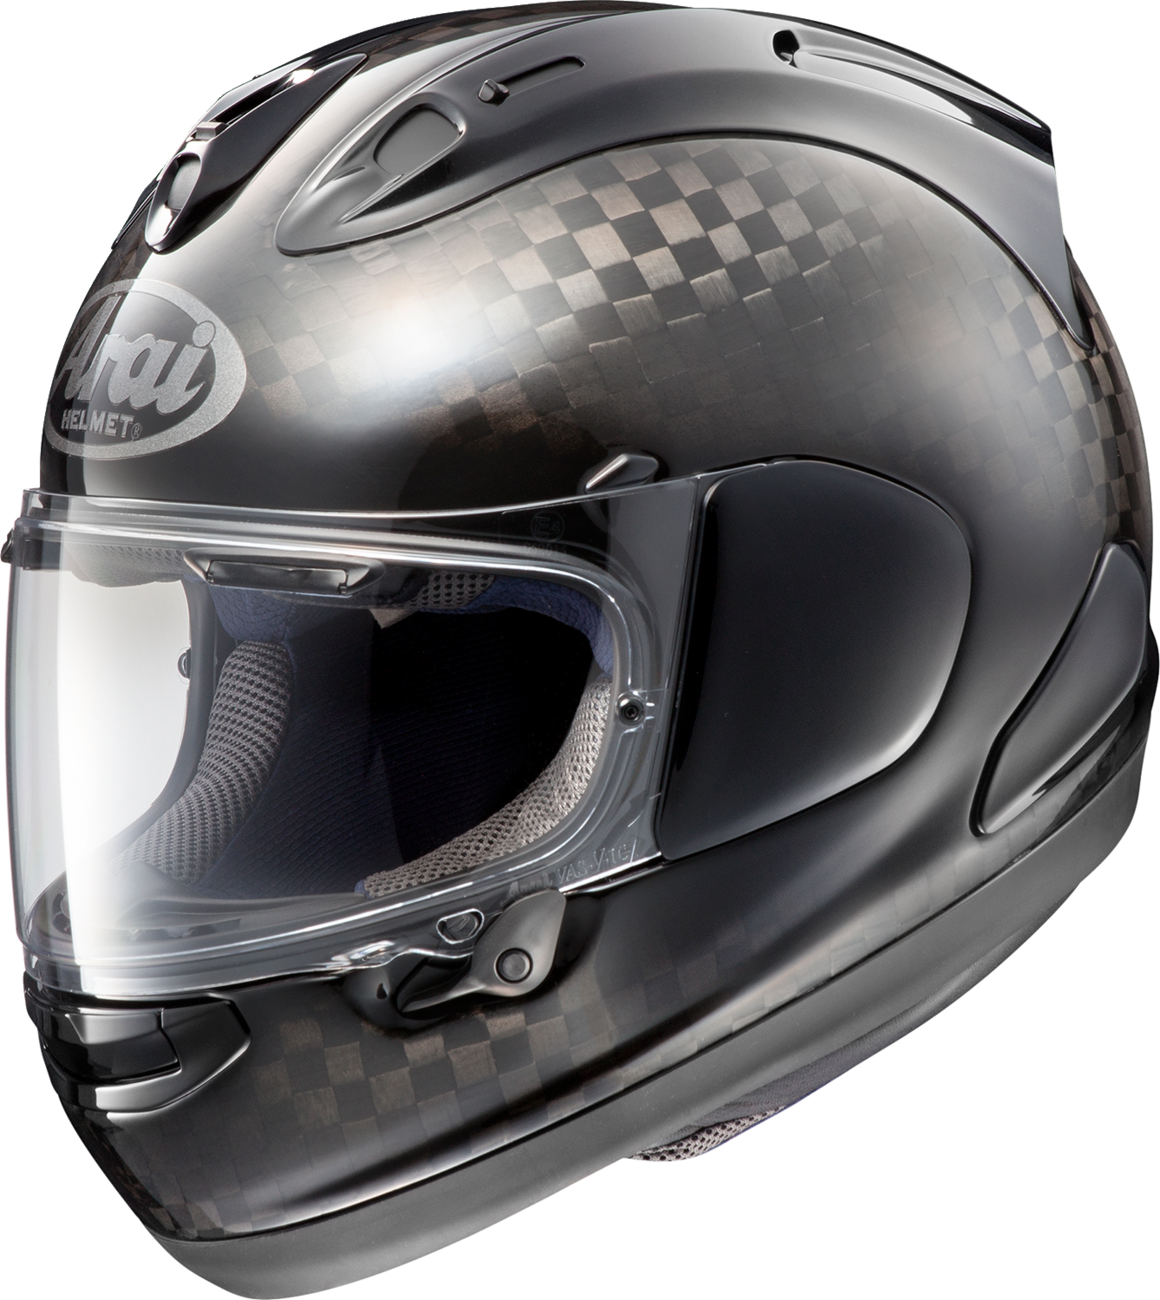 Corsair-X RC Helmet - Carbon